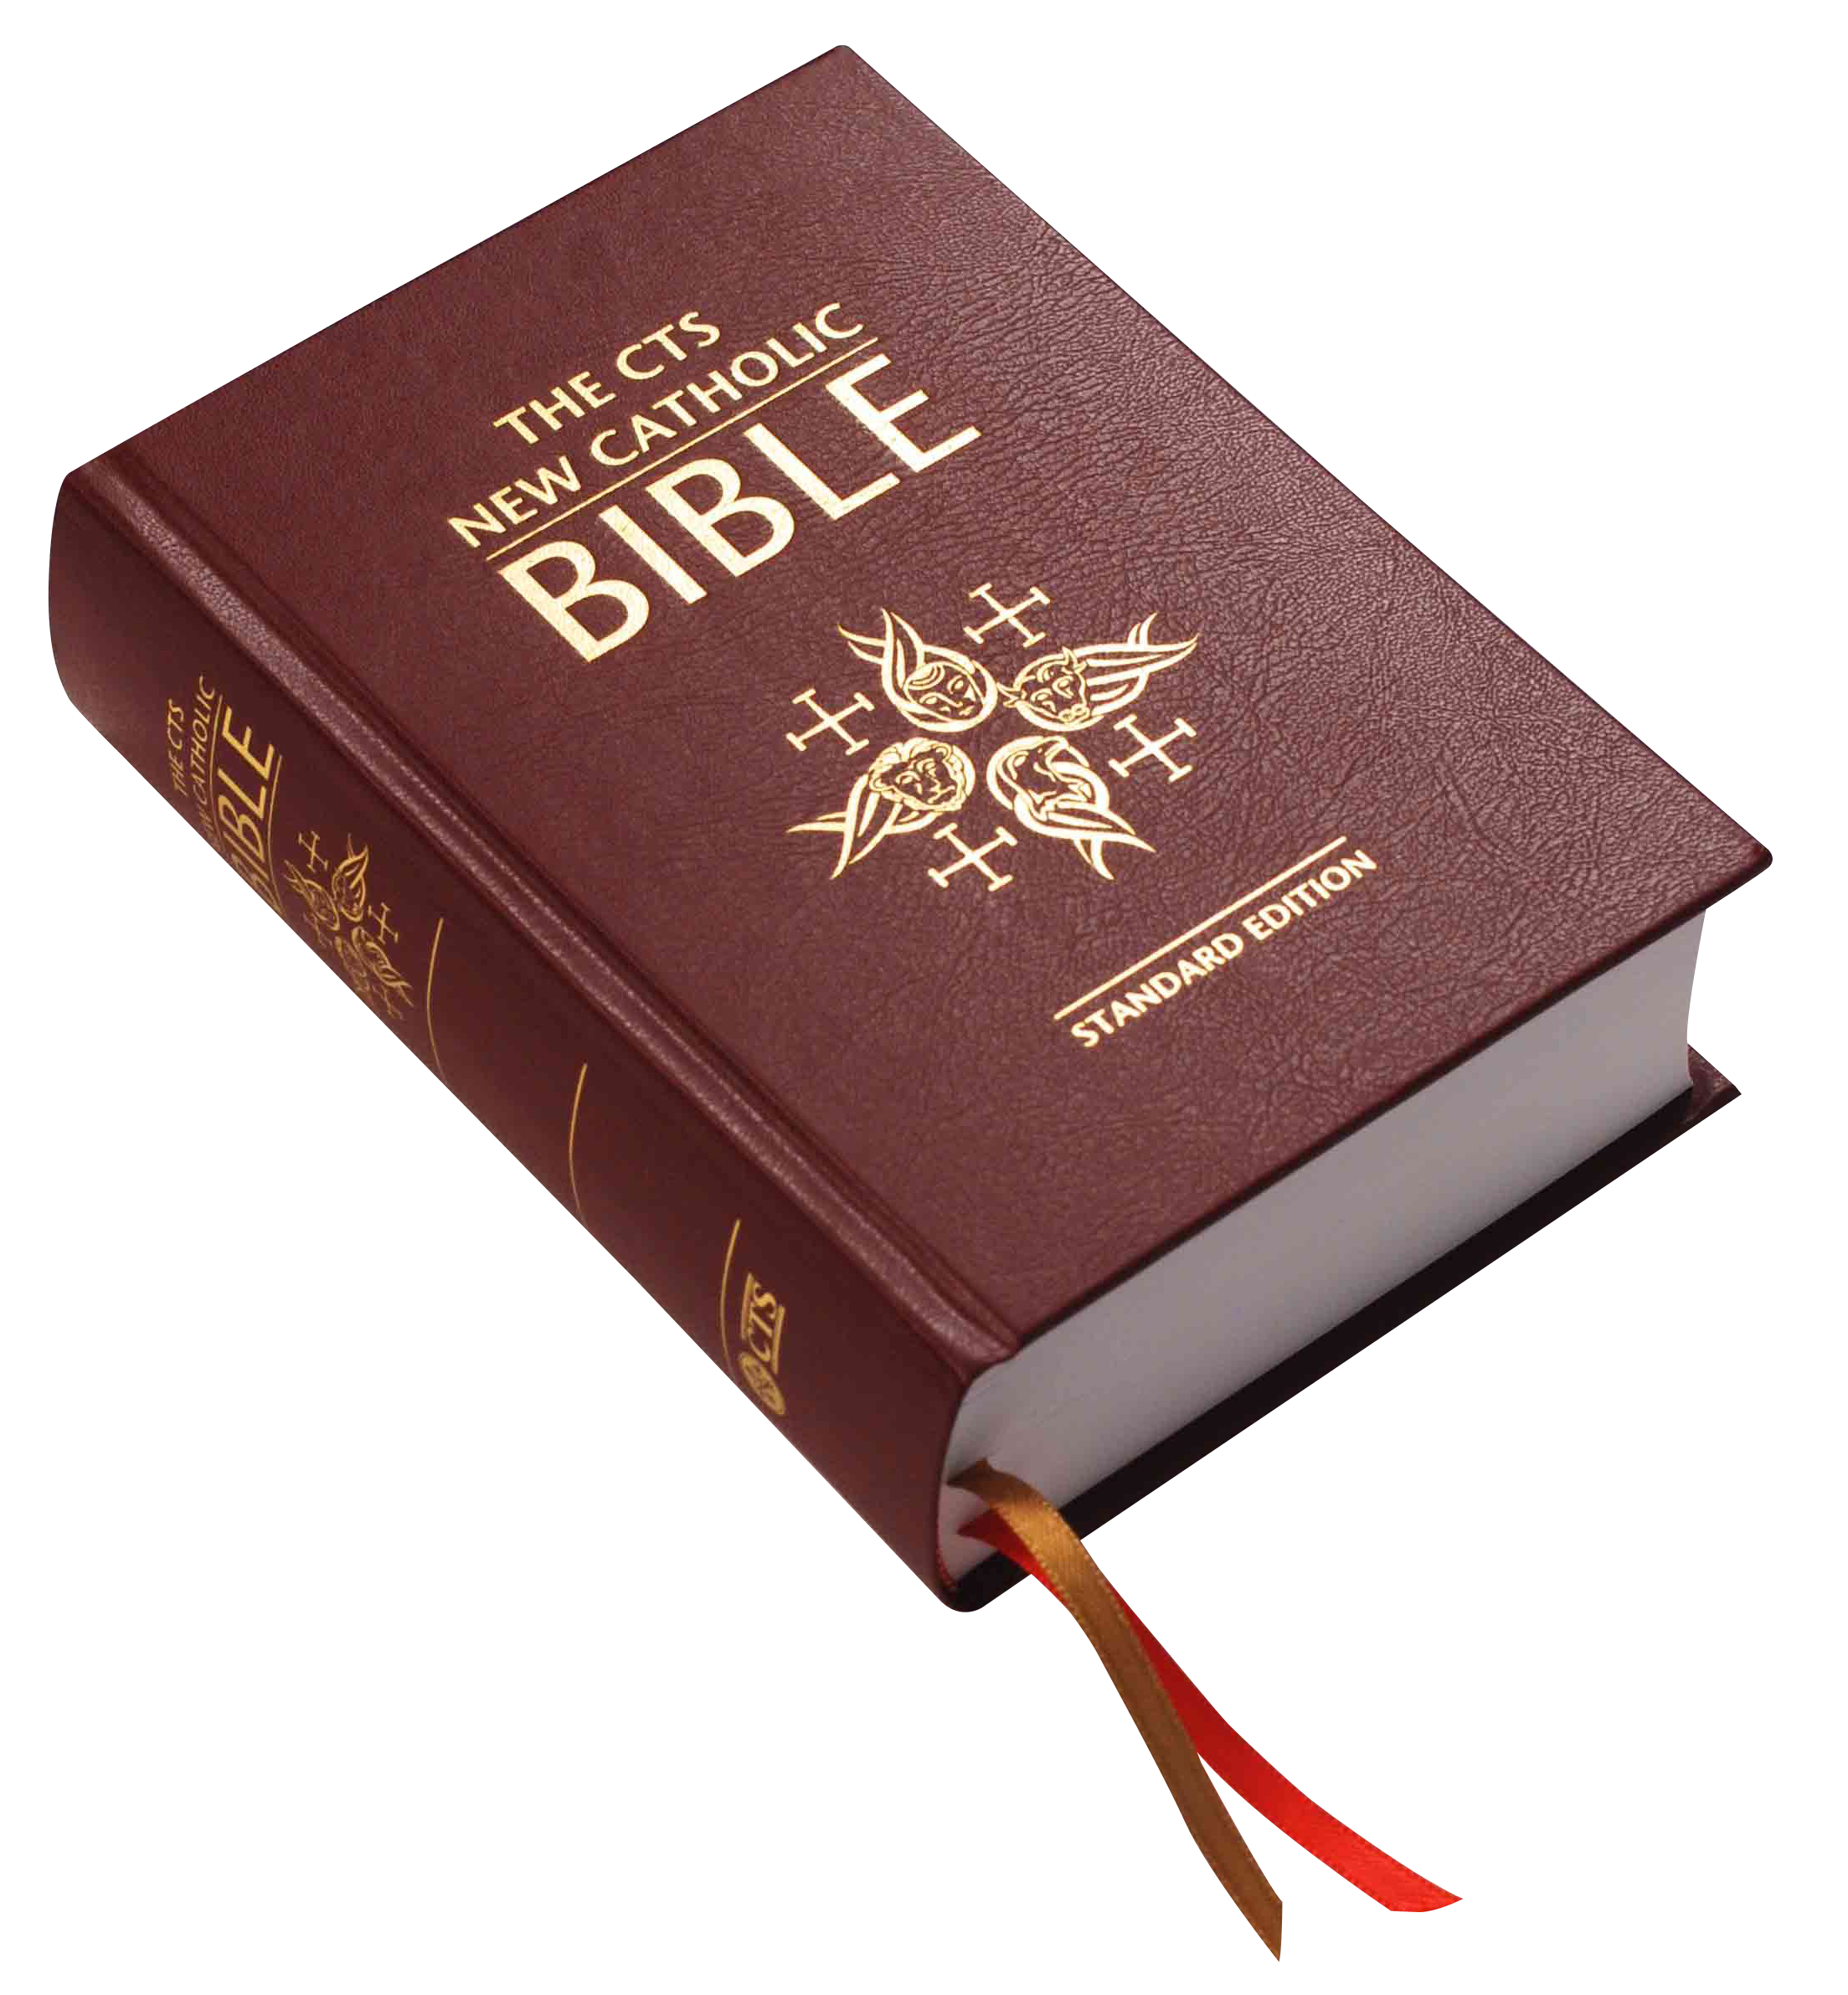 King-james-bible.png